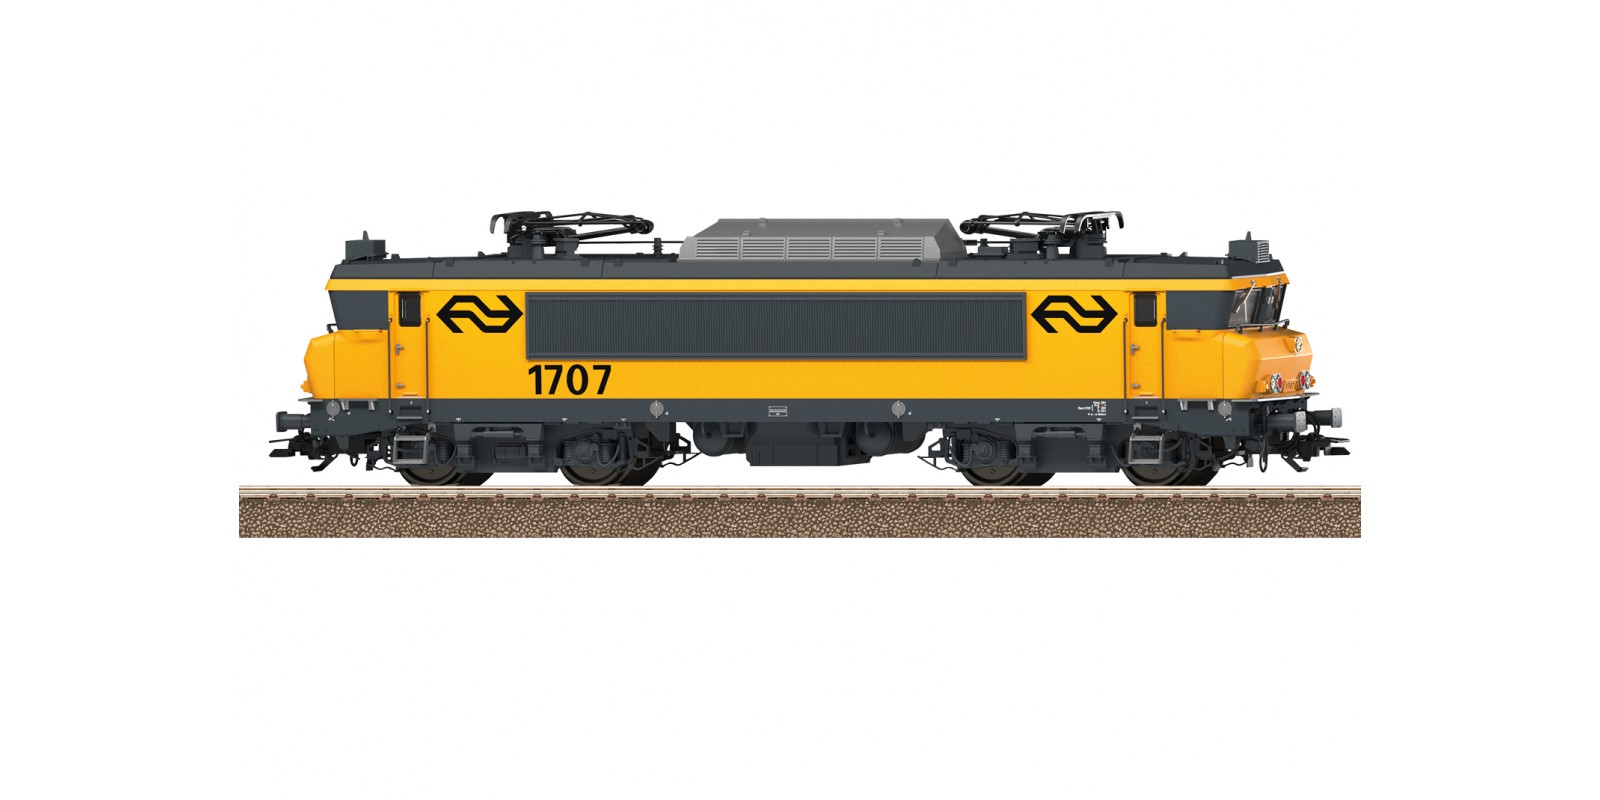 T25160 Class 1700 Electric Locomotive